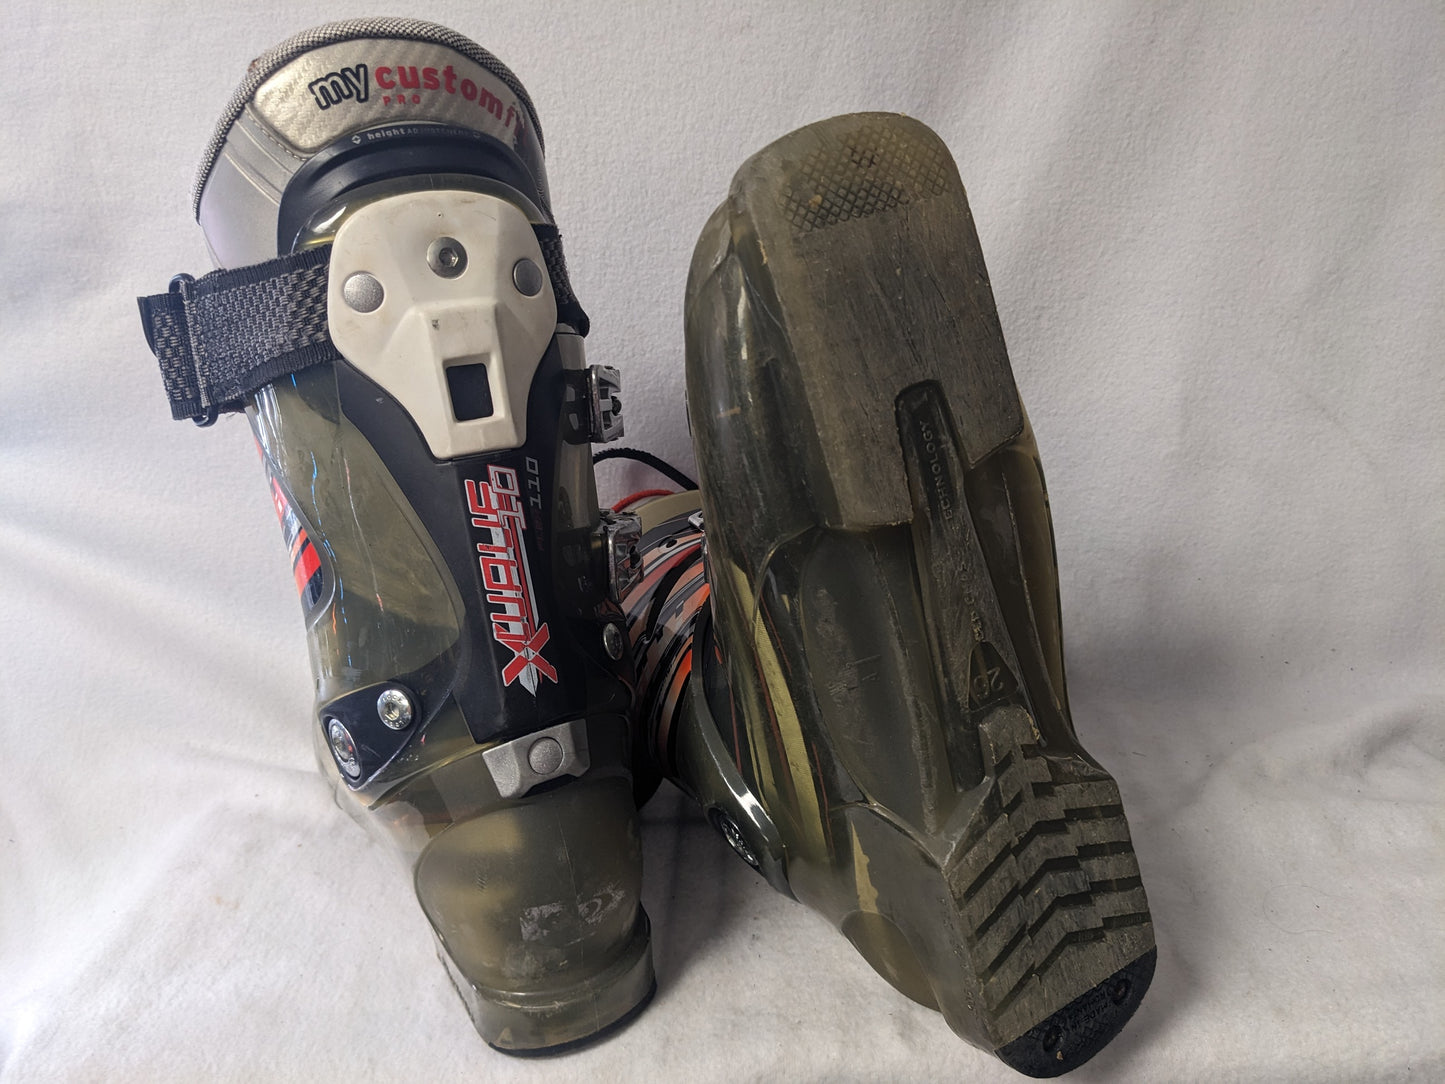 Salomon XWave 10 Flex 110 Ski Boots Size 26 Color Green Condition Used